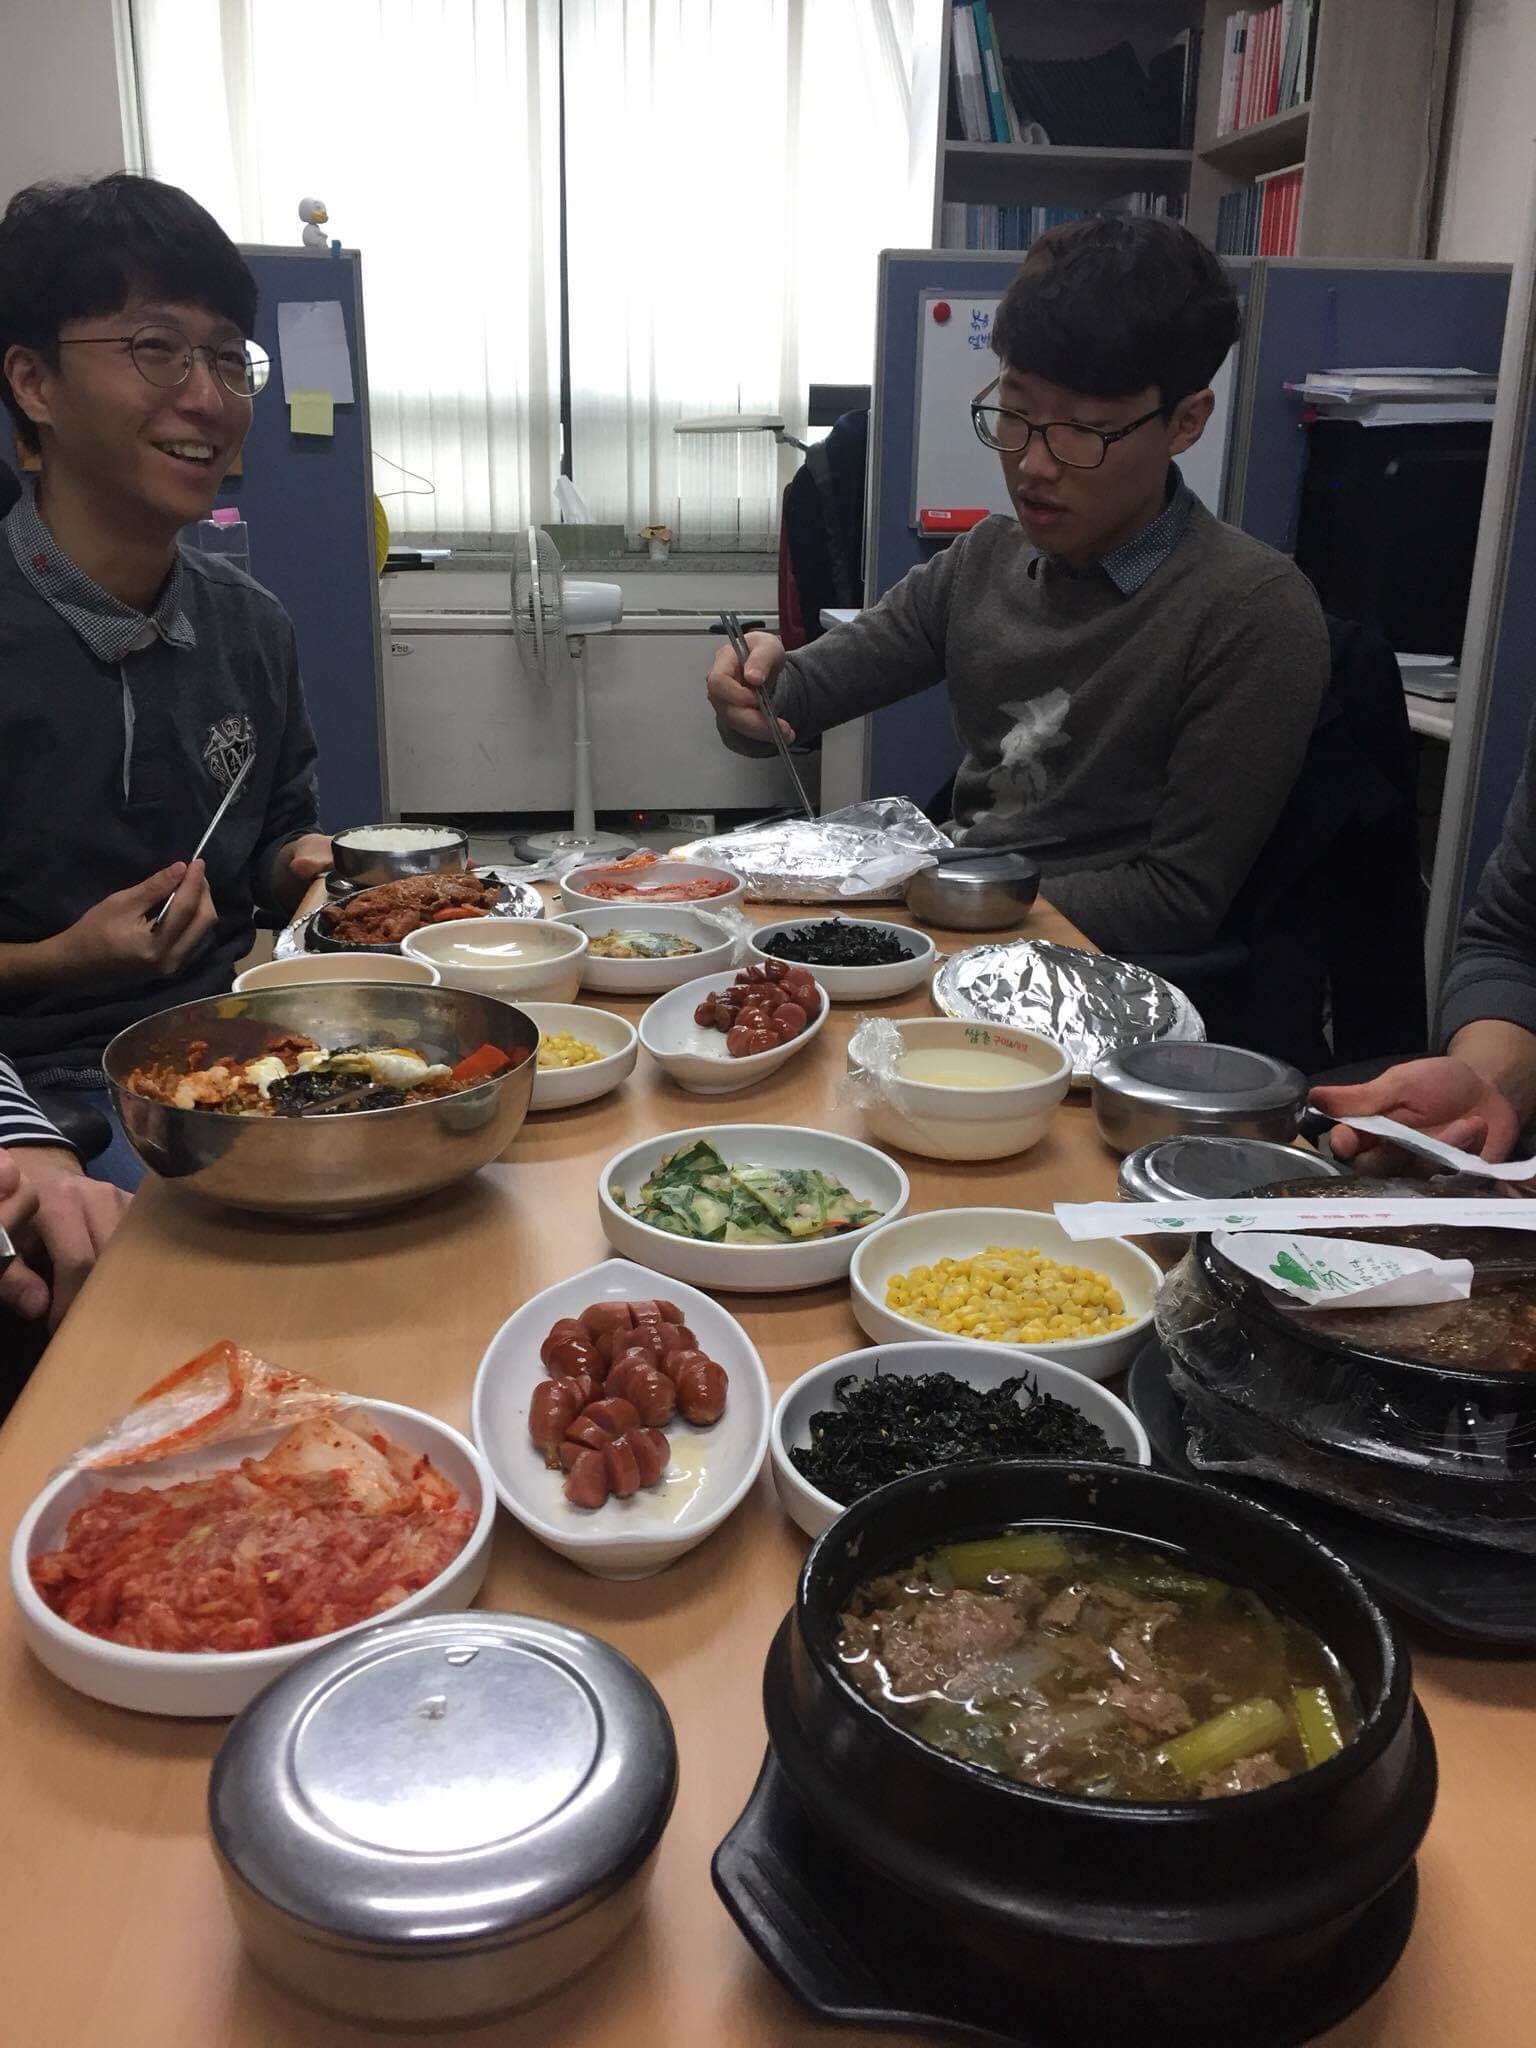 Dinner at Hanyang University, 2017.